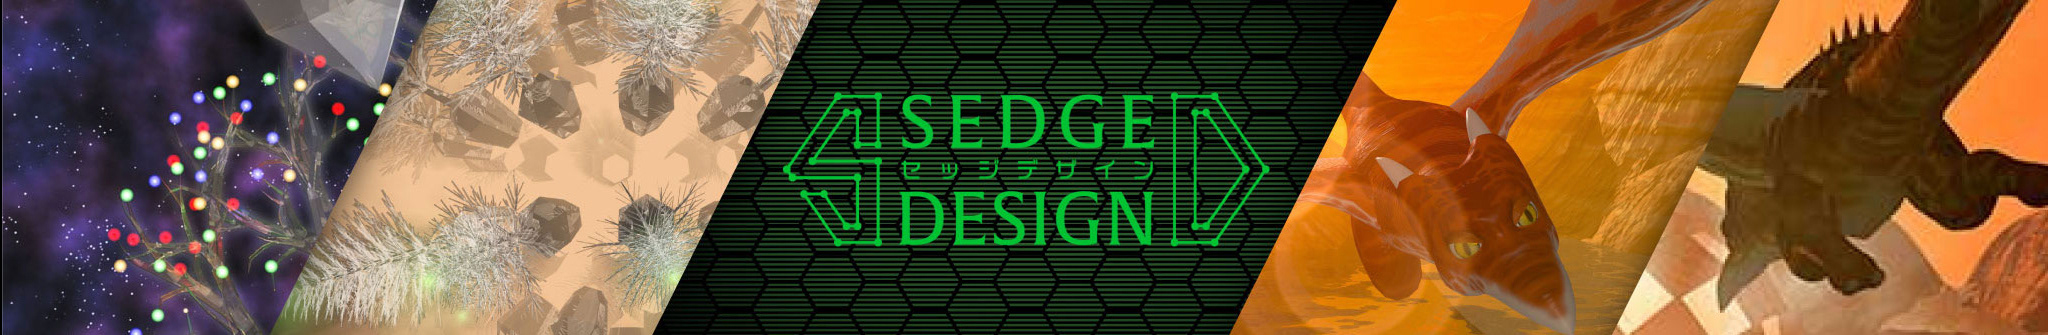 Banner profilu uživatele Sedge Design